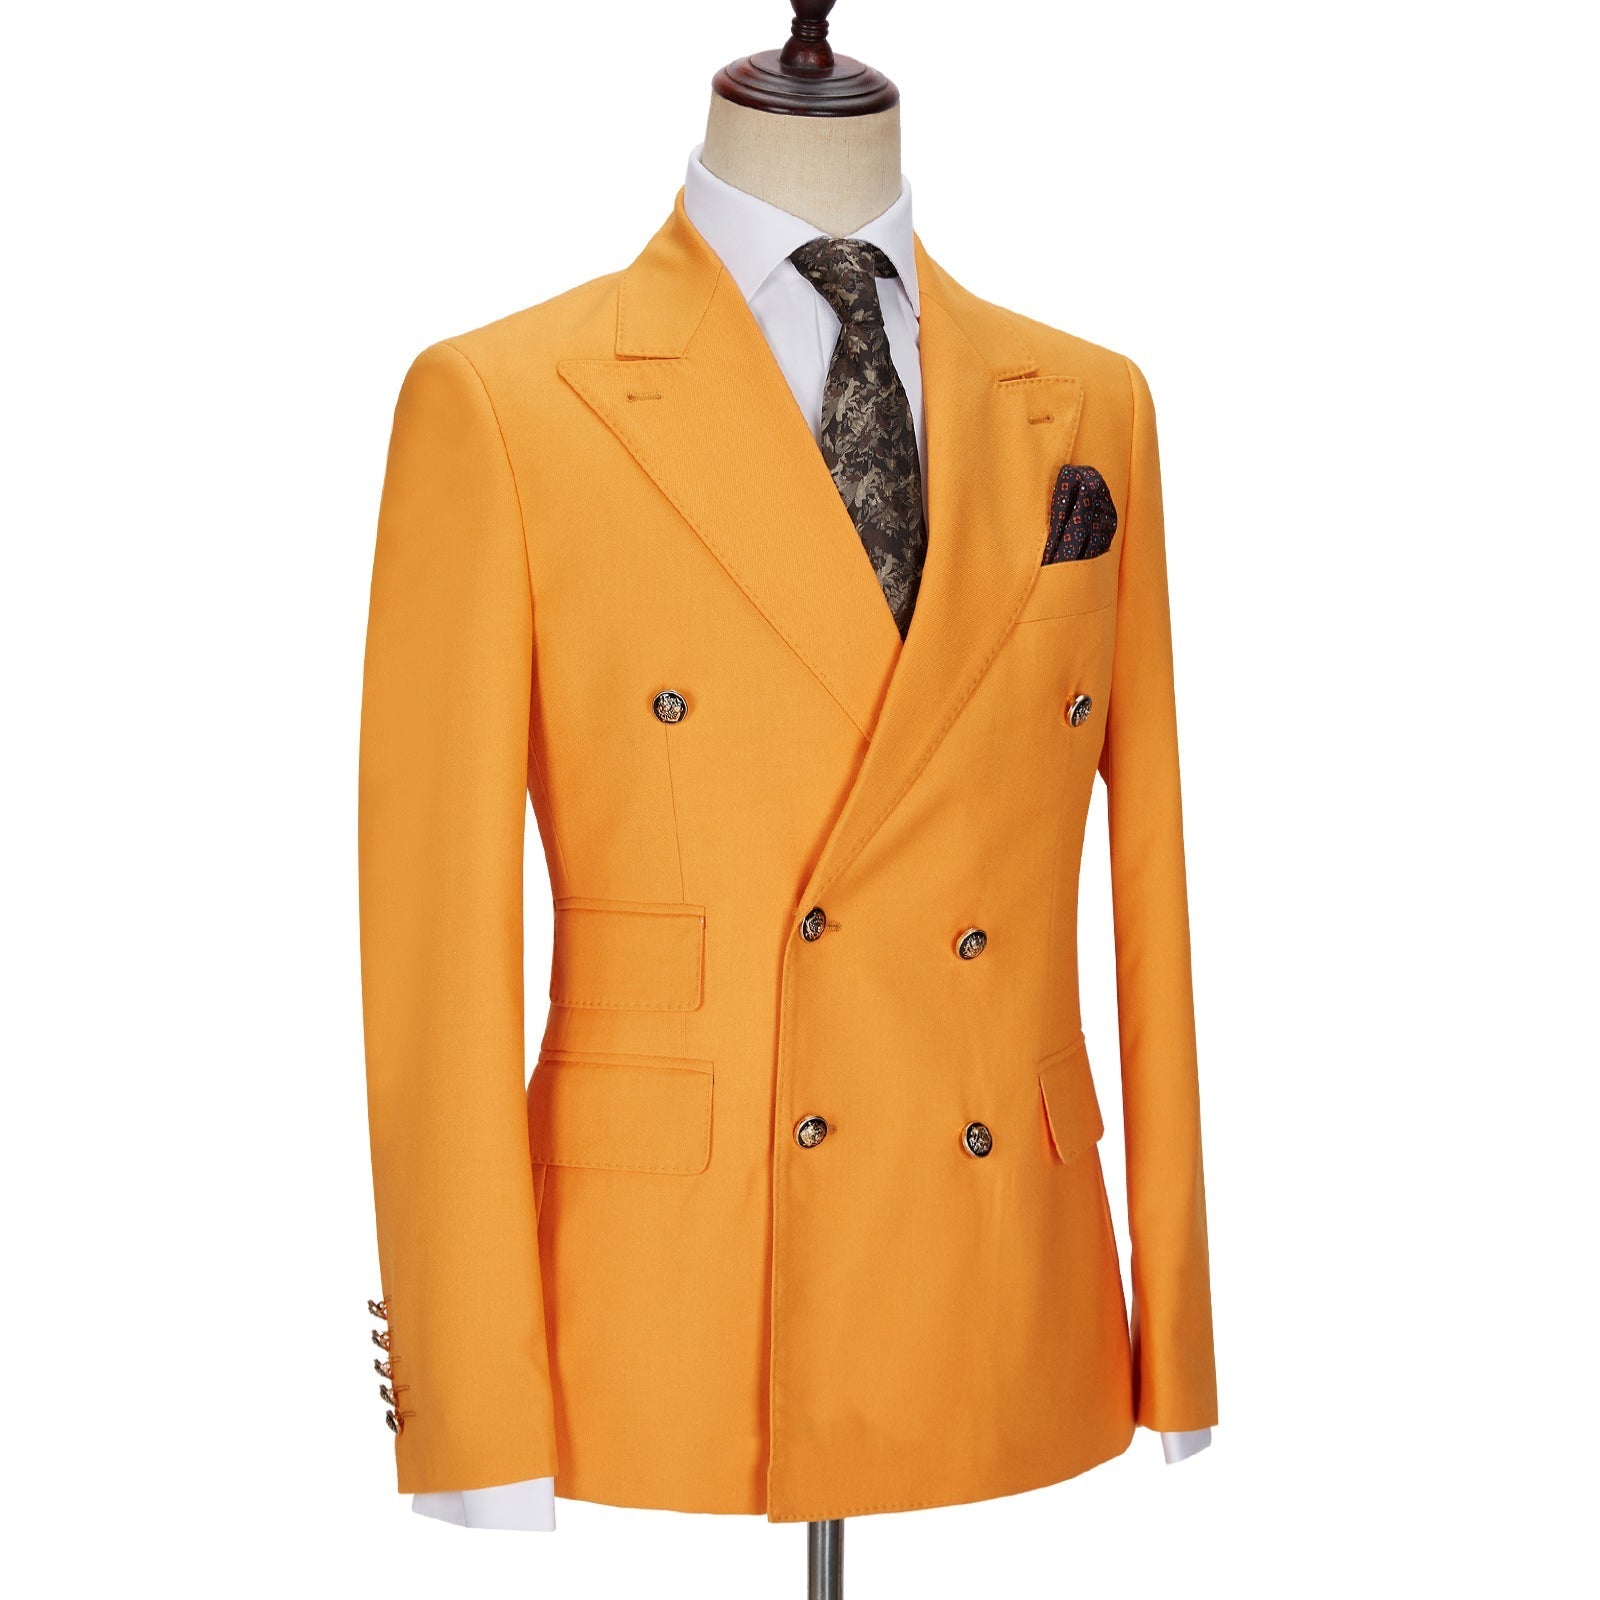 Hot Sale Orange Men Suits by Benjamin - Double Breasted Peaked Lapel-Wedding Suits-BallBride